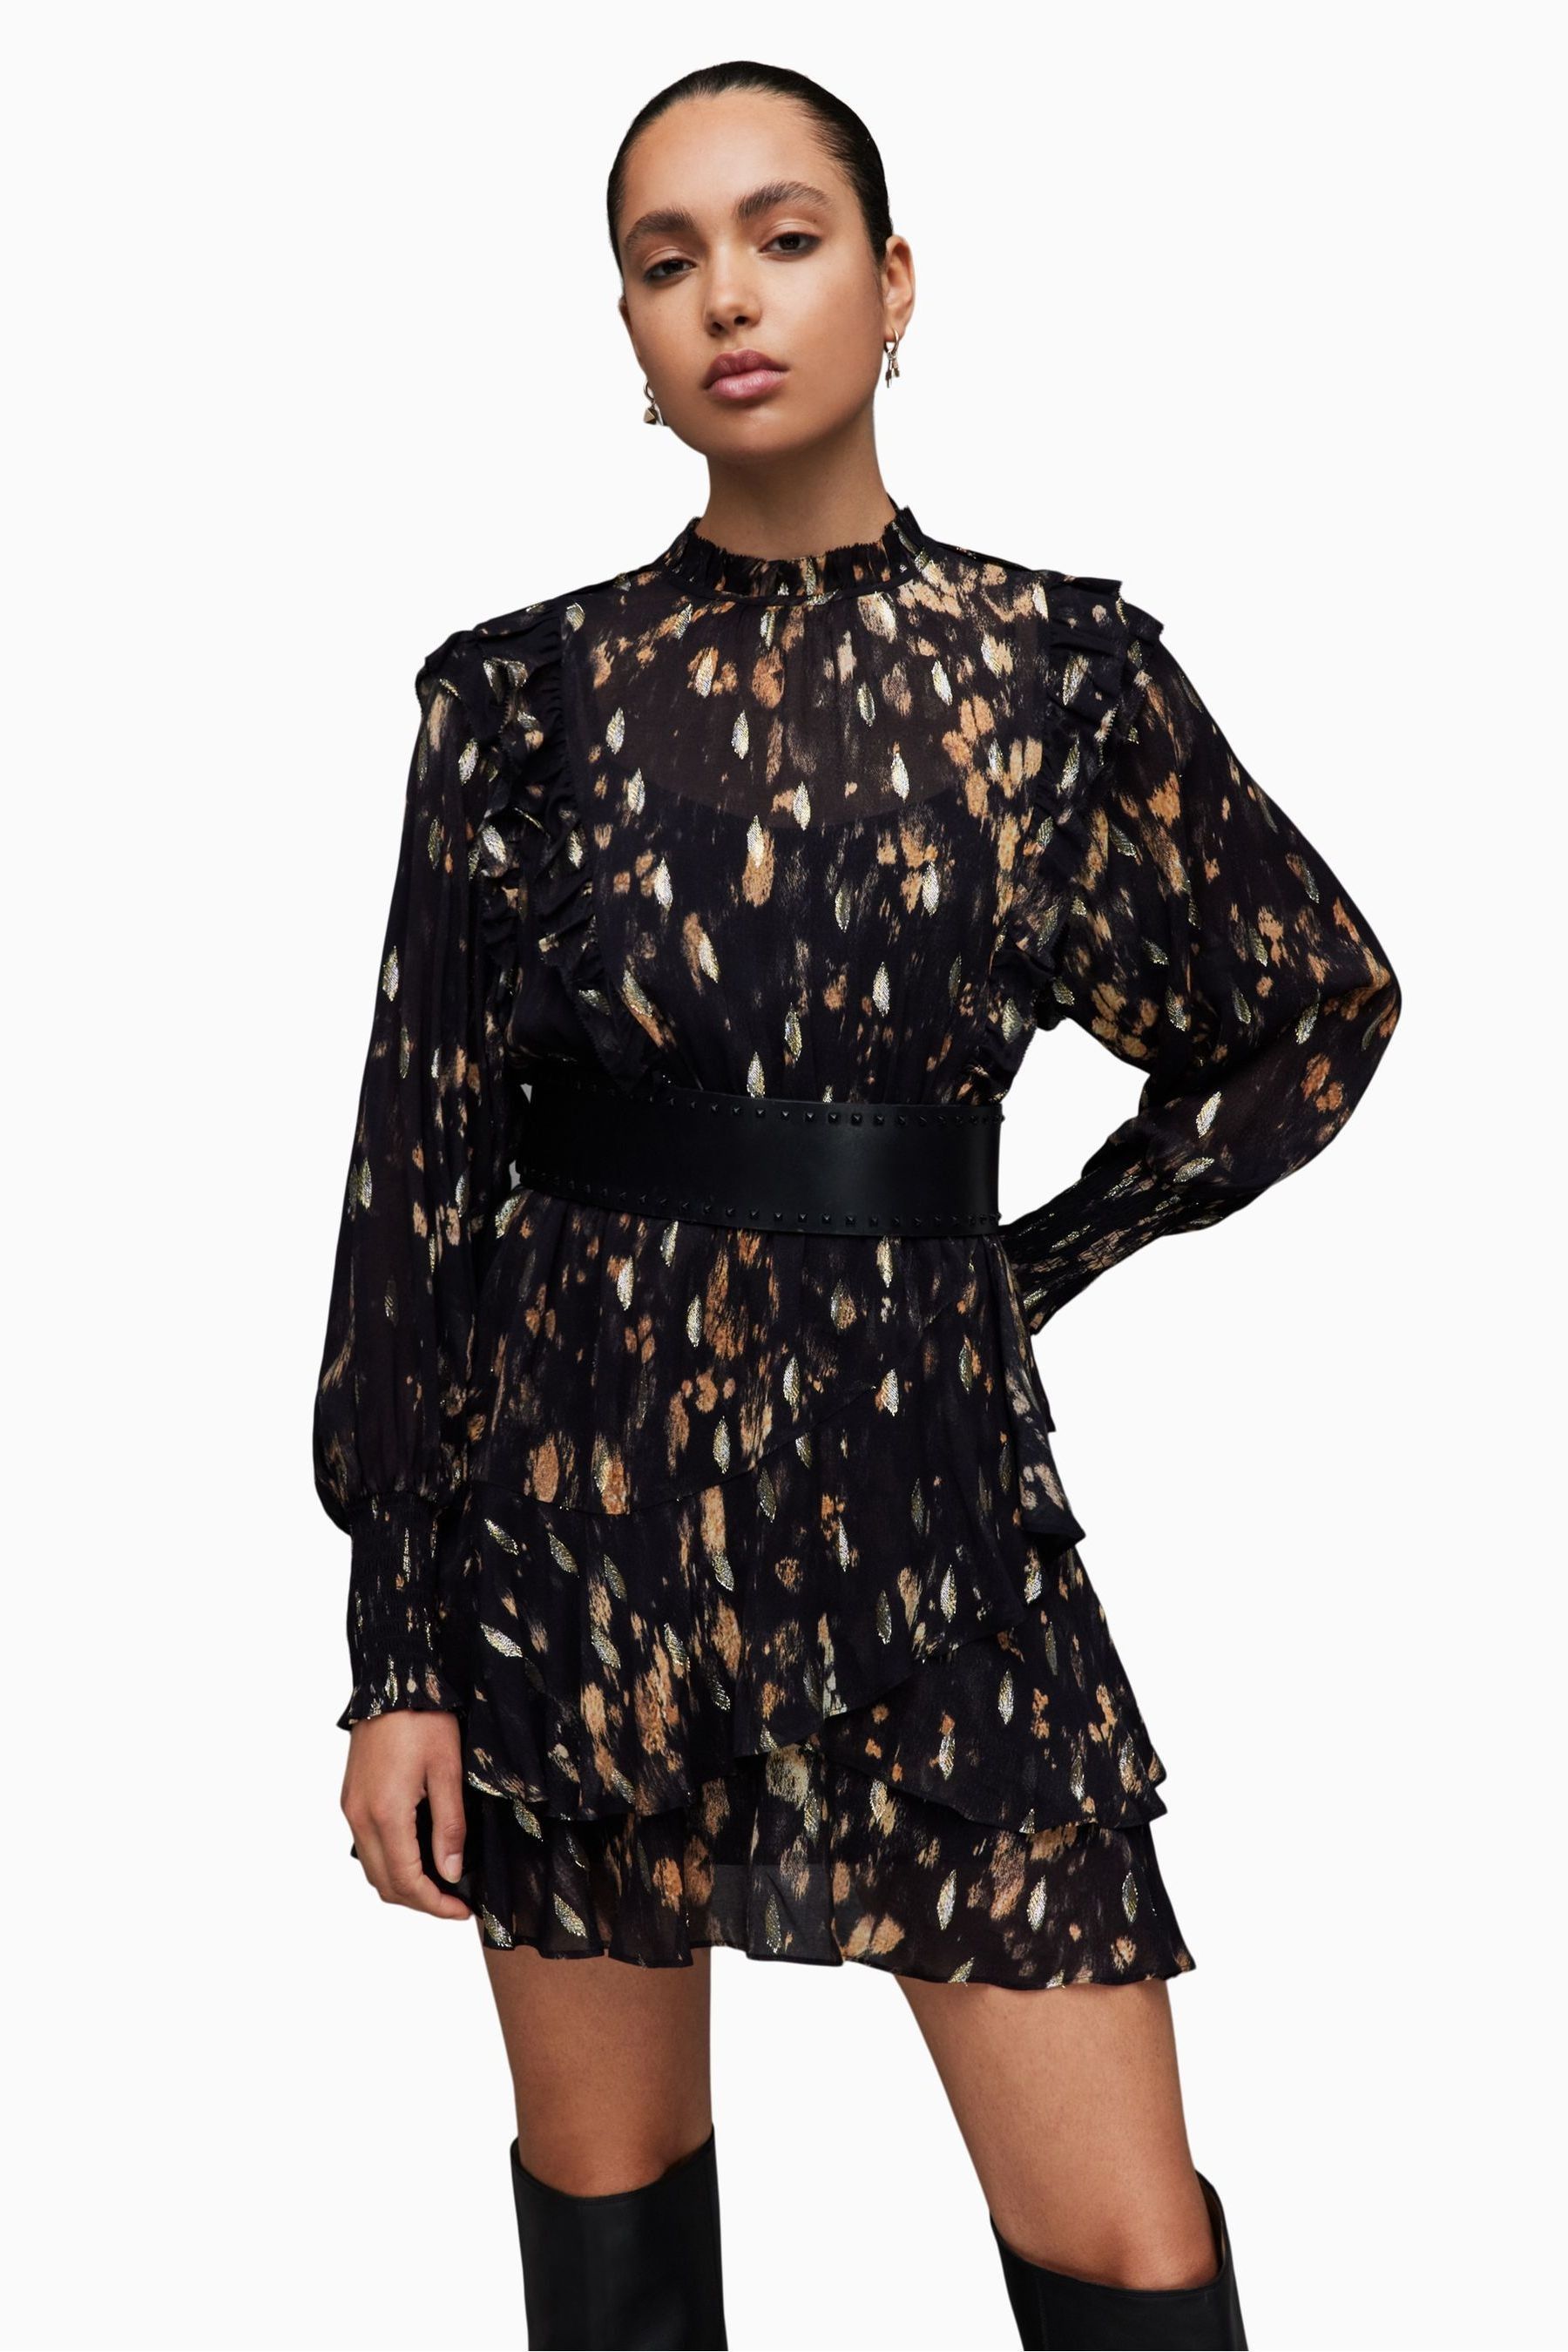 Buy AllSaints Tulia Ronnie Black Dress from the Next UK online shop